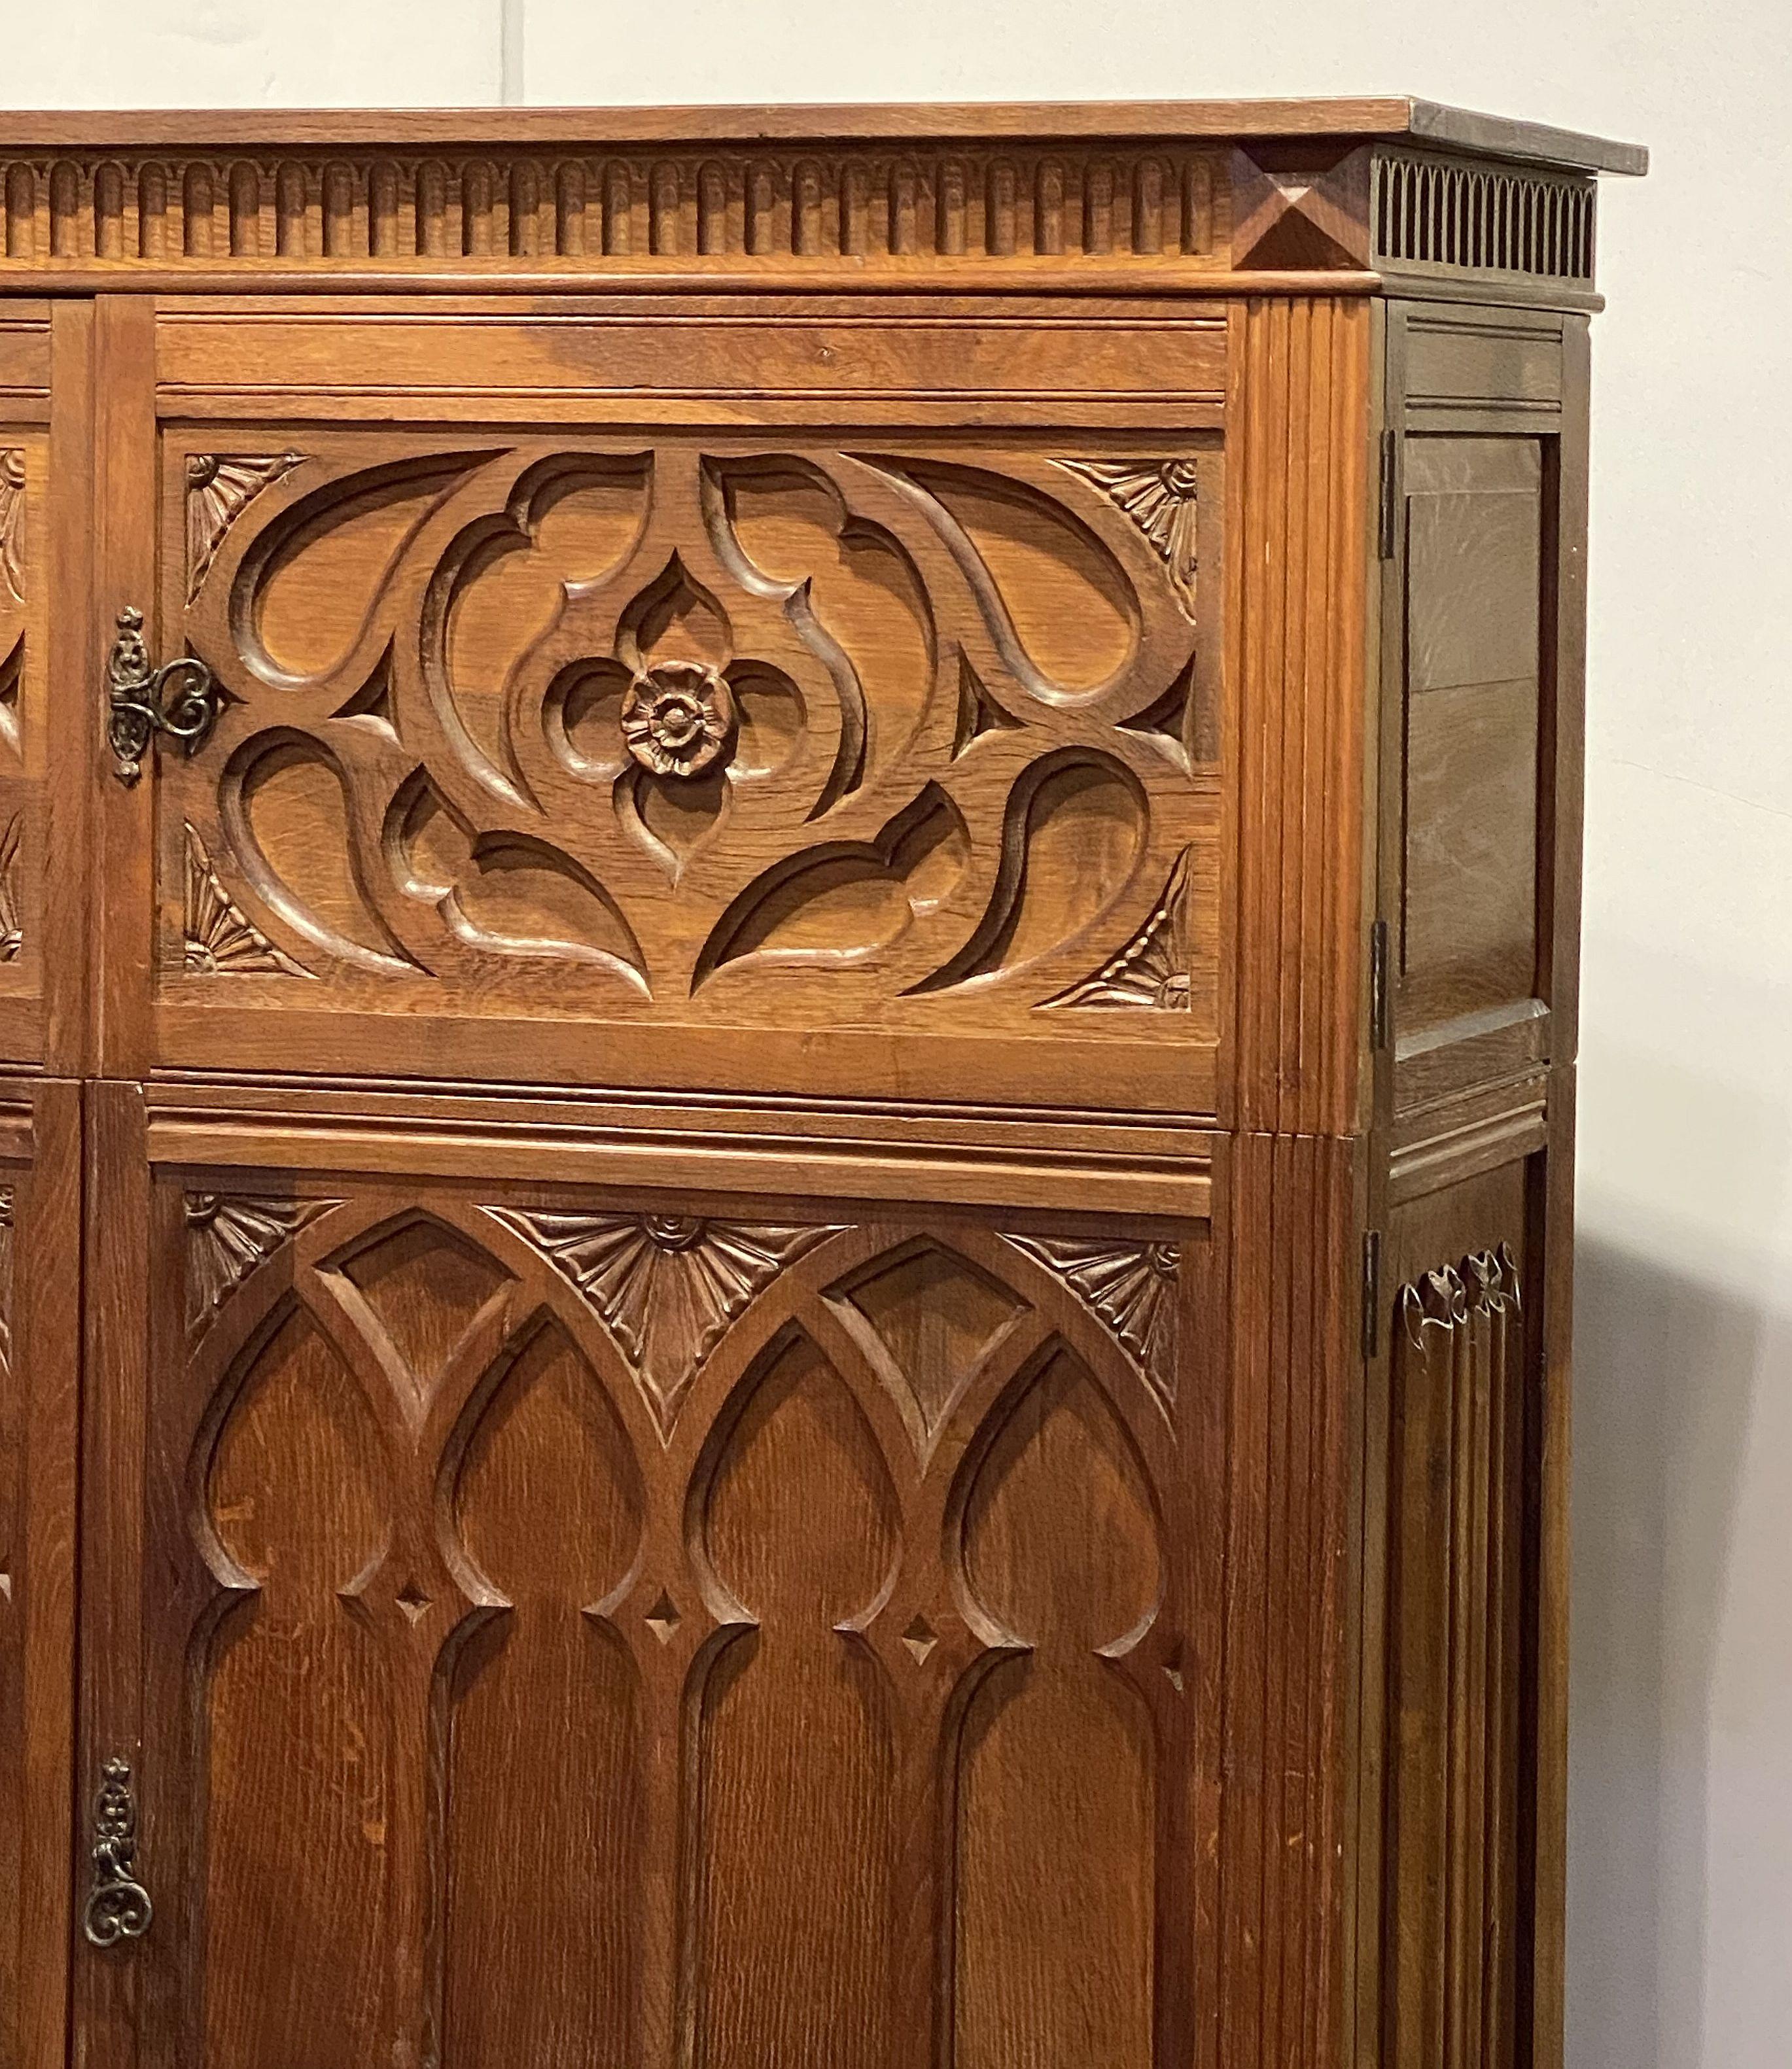 Elizabethan Large English Historical Housekeeper's Cabinet or Cupboard of Oak